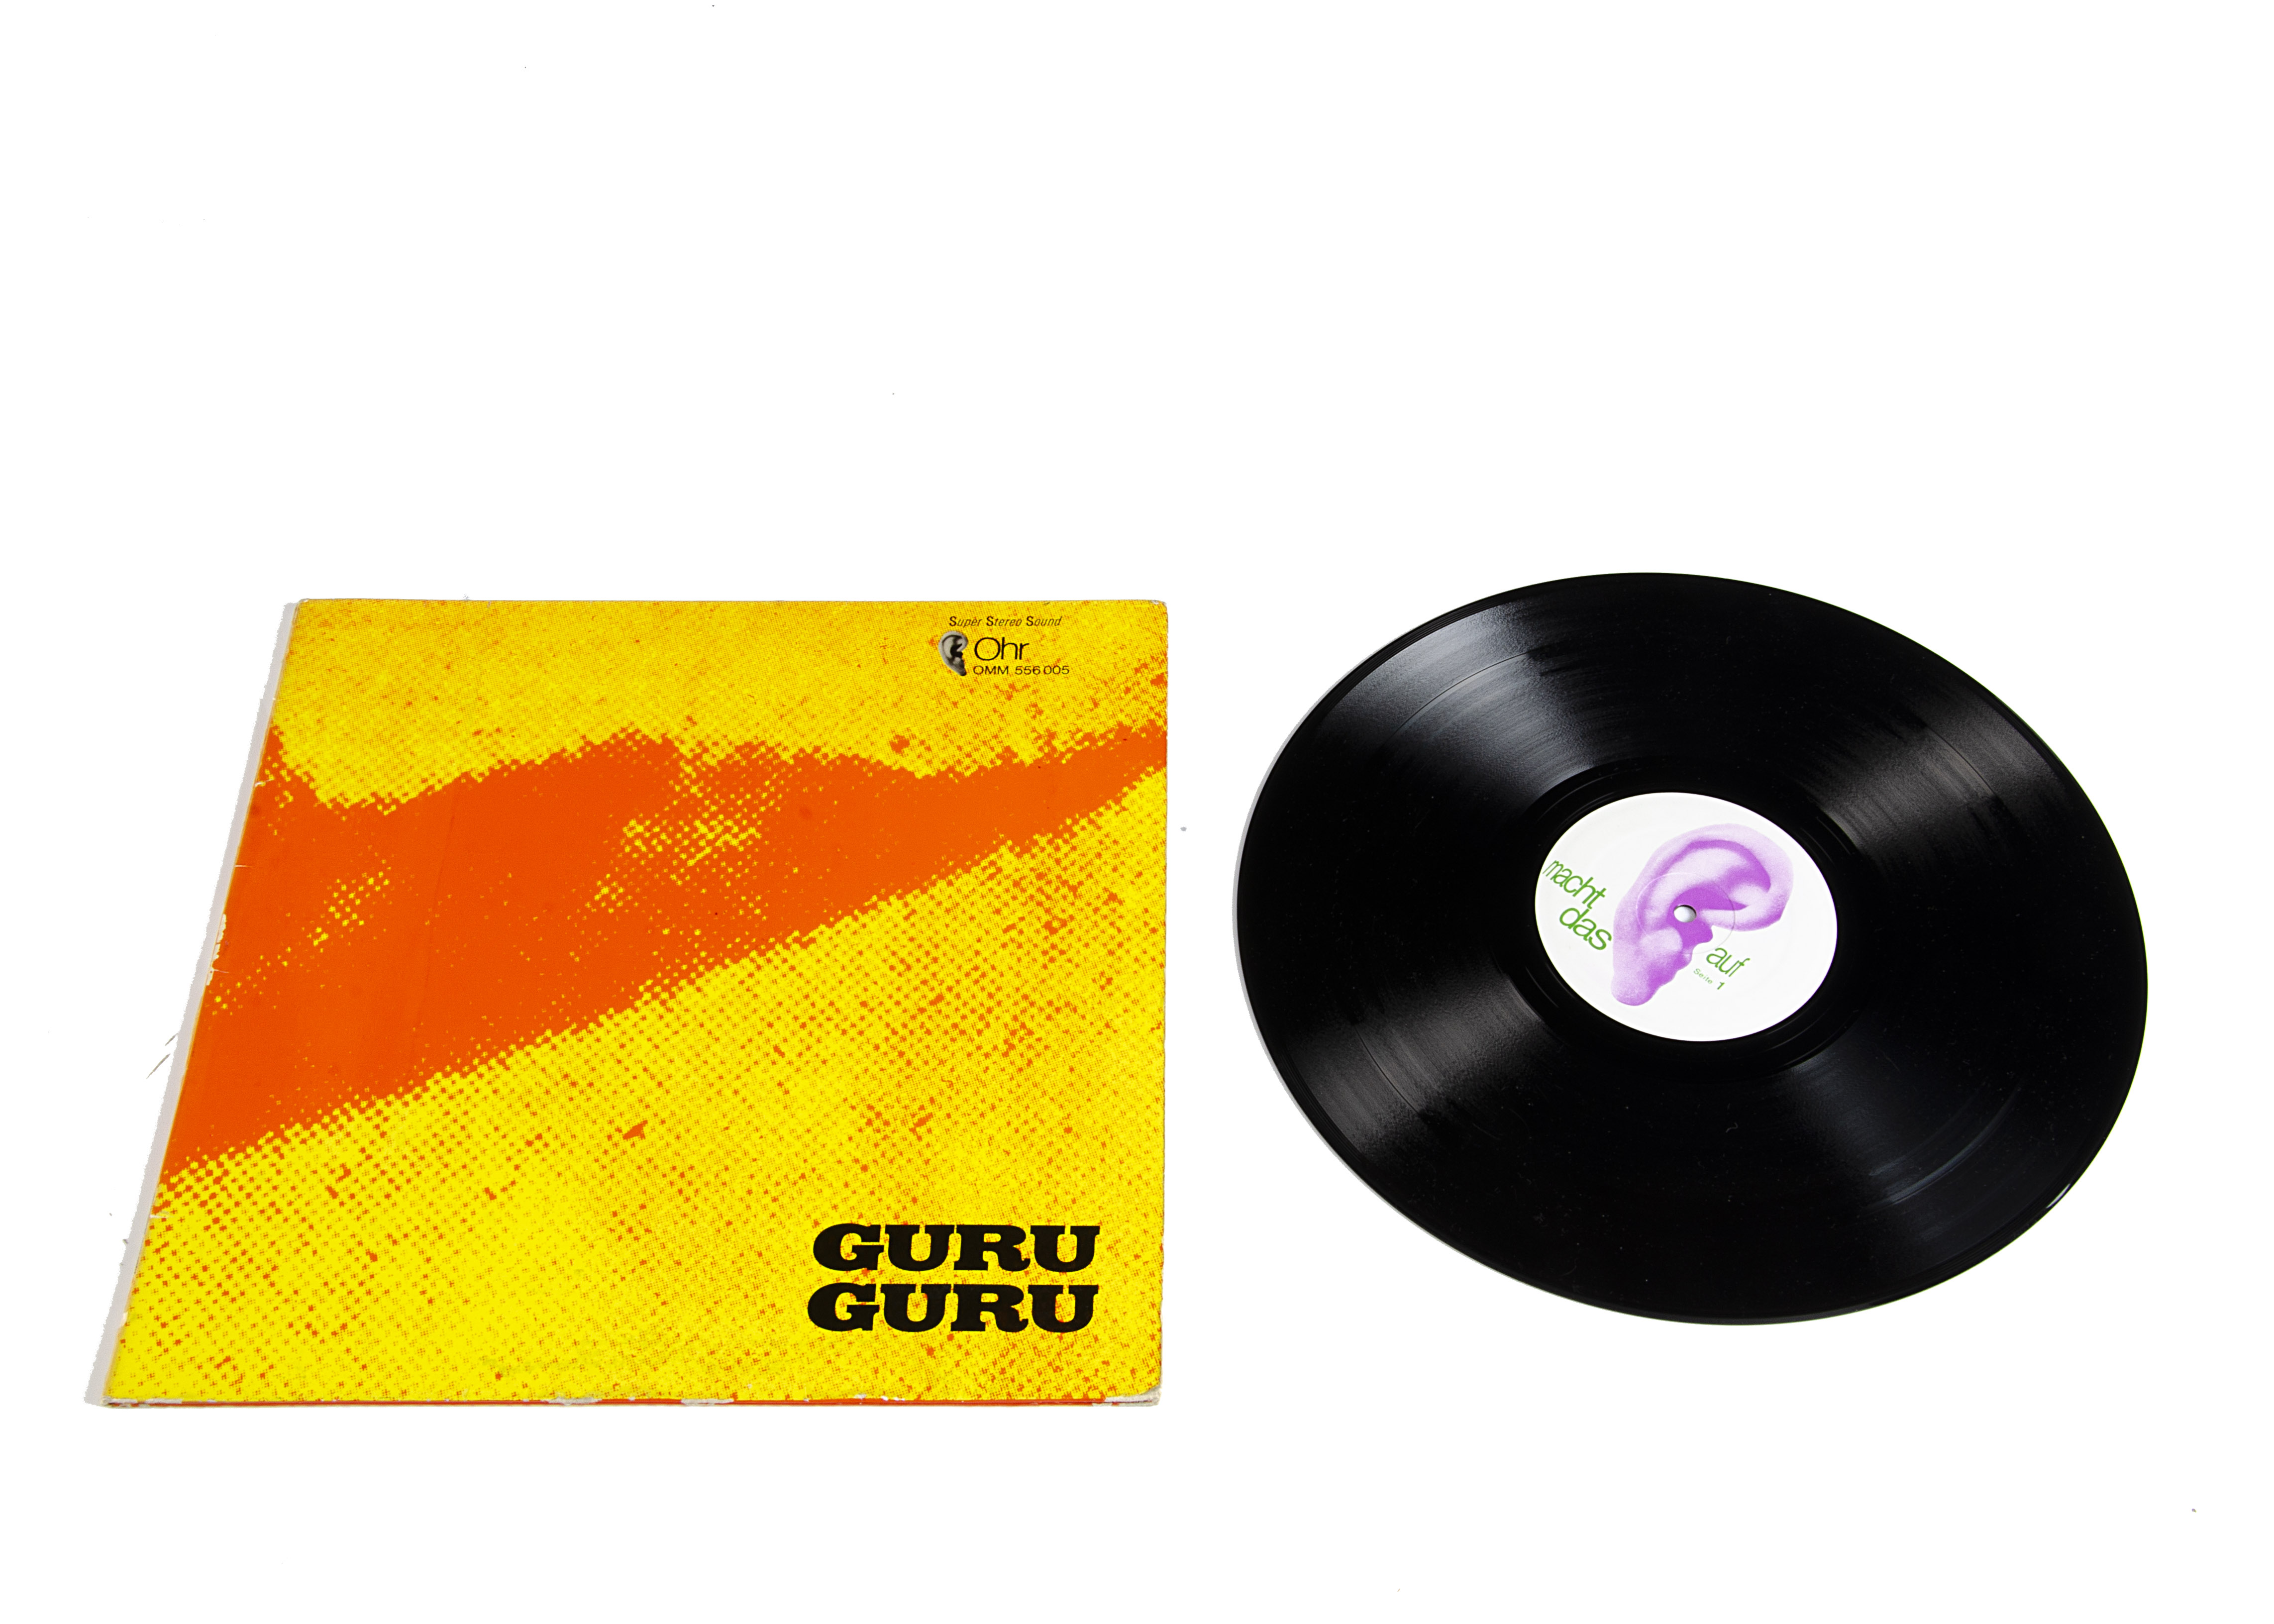 Guru Guru LP, Hinten LP - Original German release 1971 on Ohr (OMM 556.017) - Laminated Gatefold